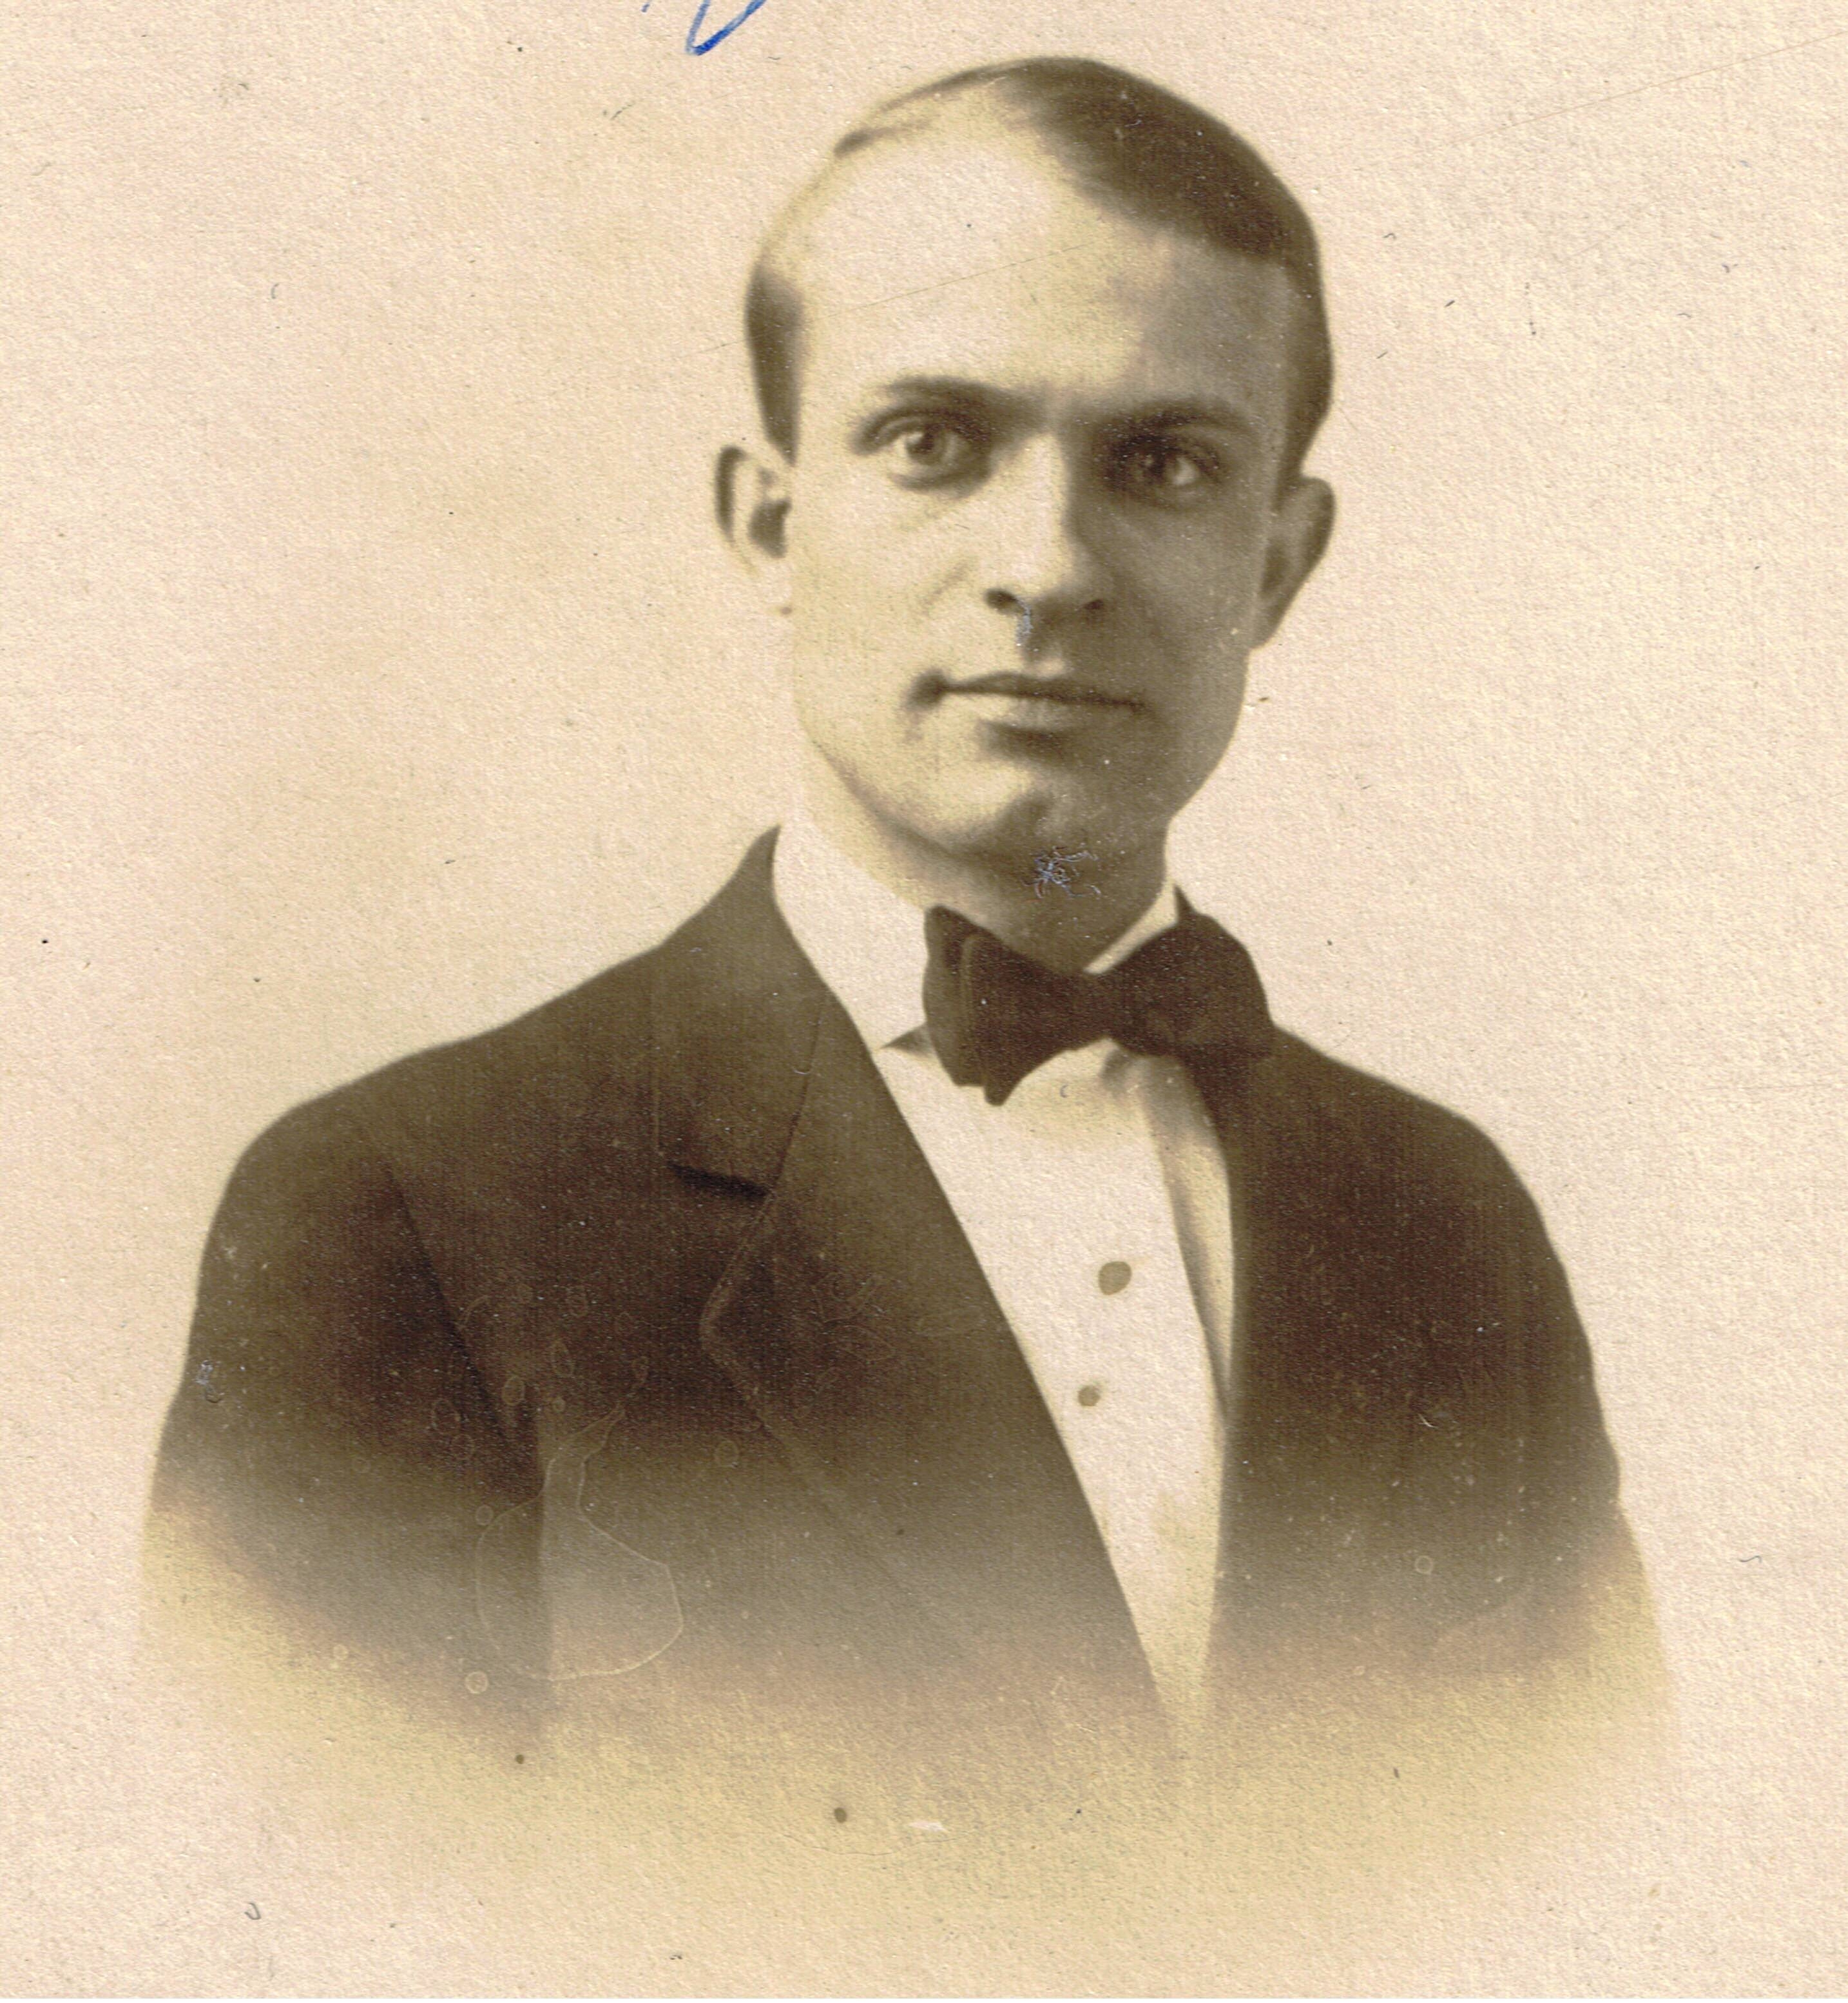 Edward C. Zuckermandel